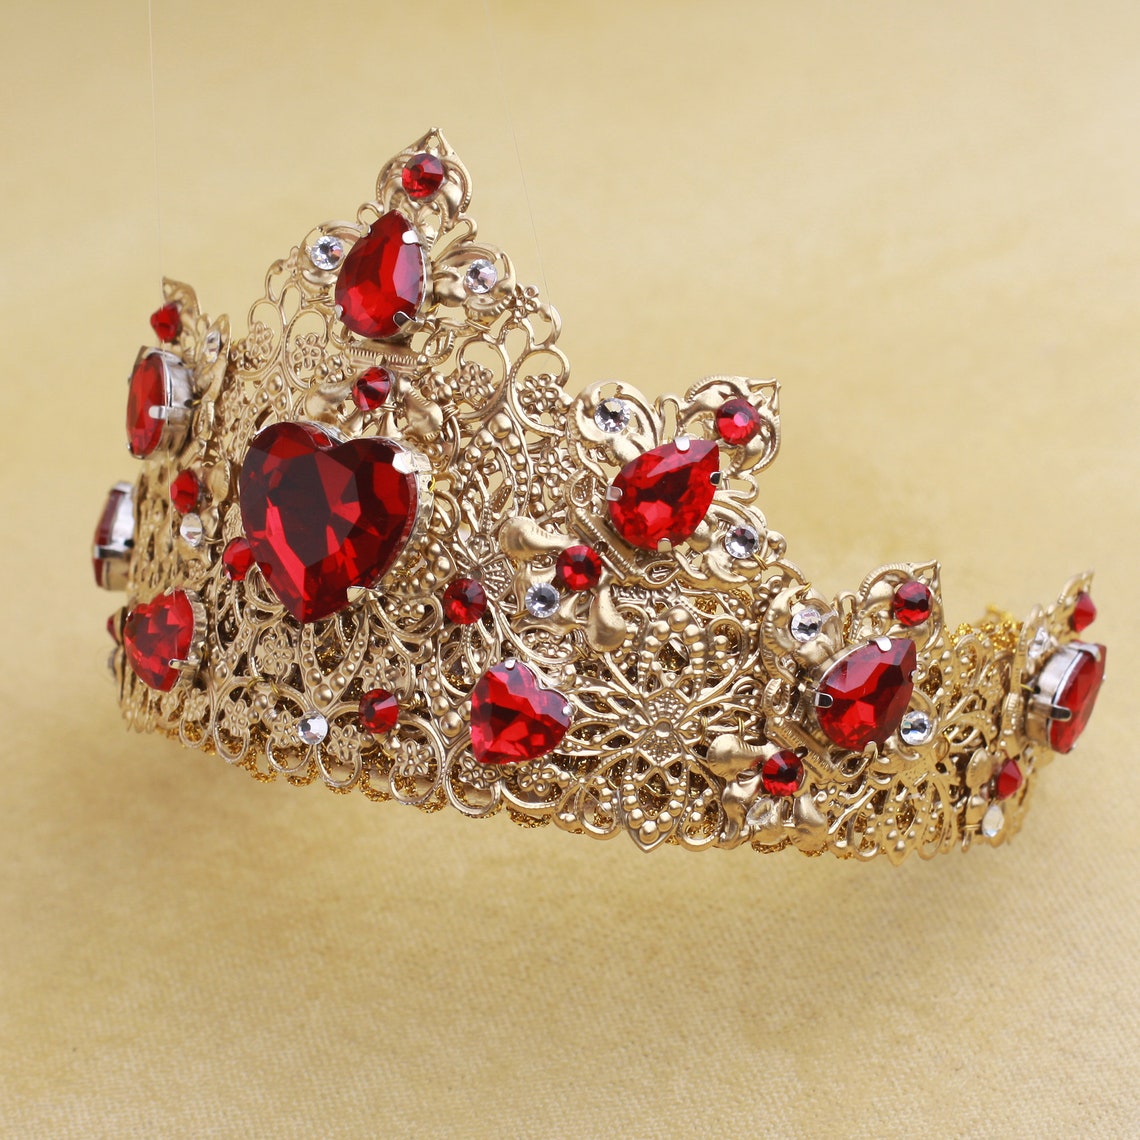 Red Queen Crown Queen Of Hearts Crown Red Queen Tiara Red Etsy